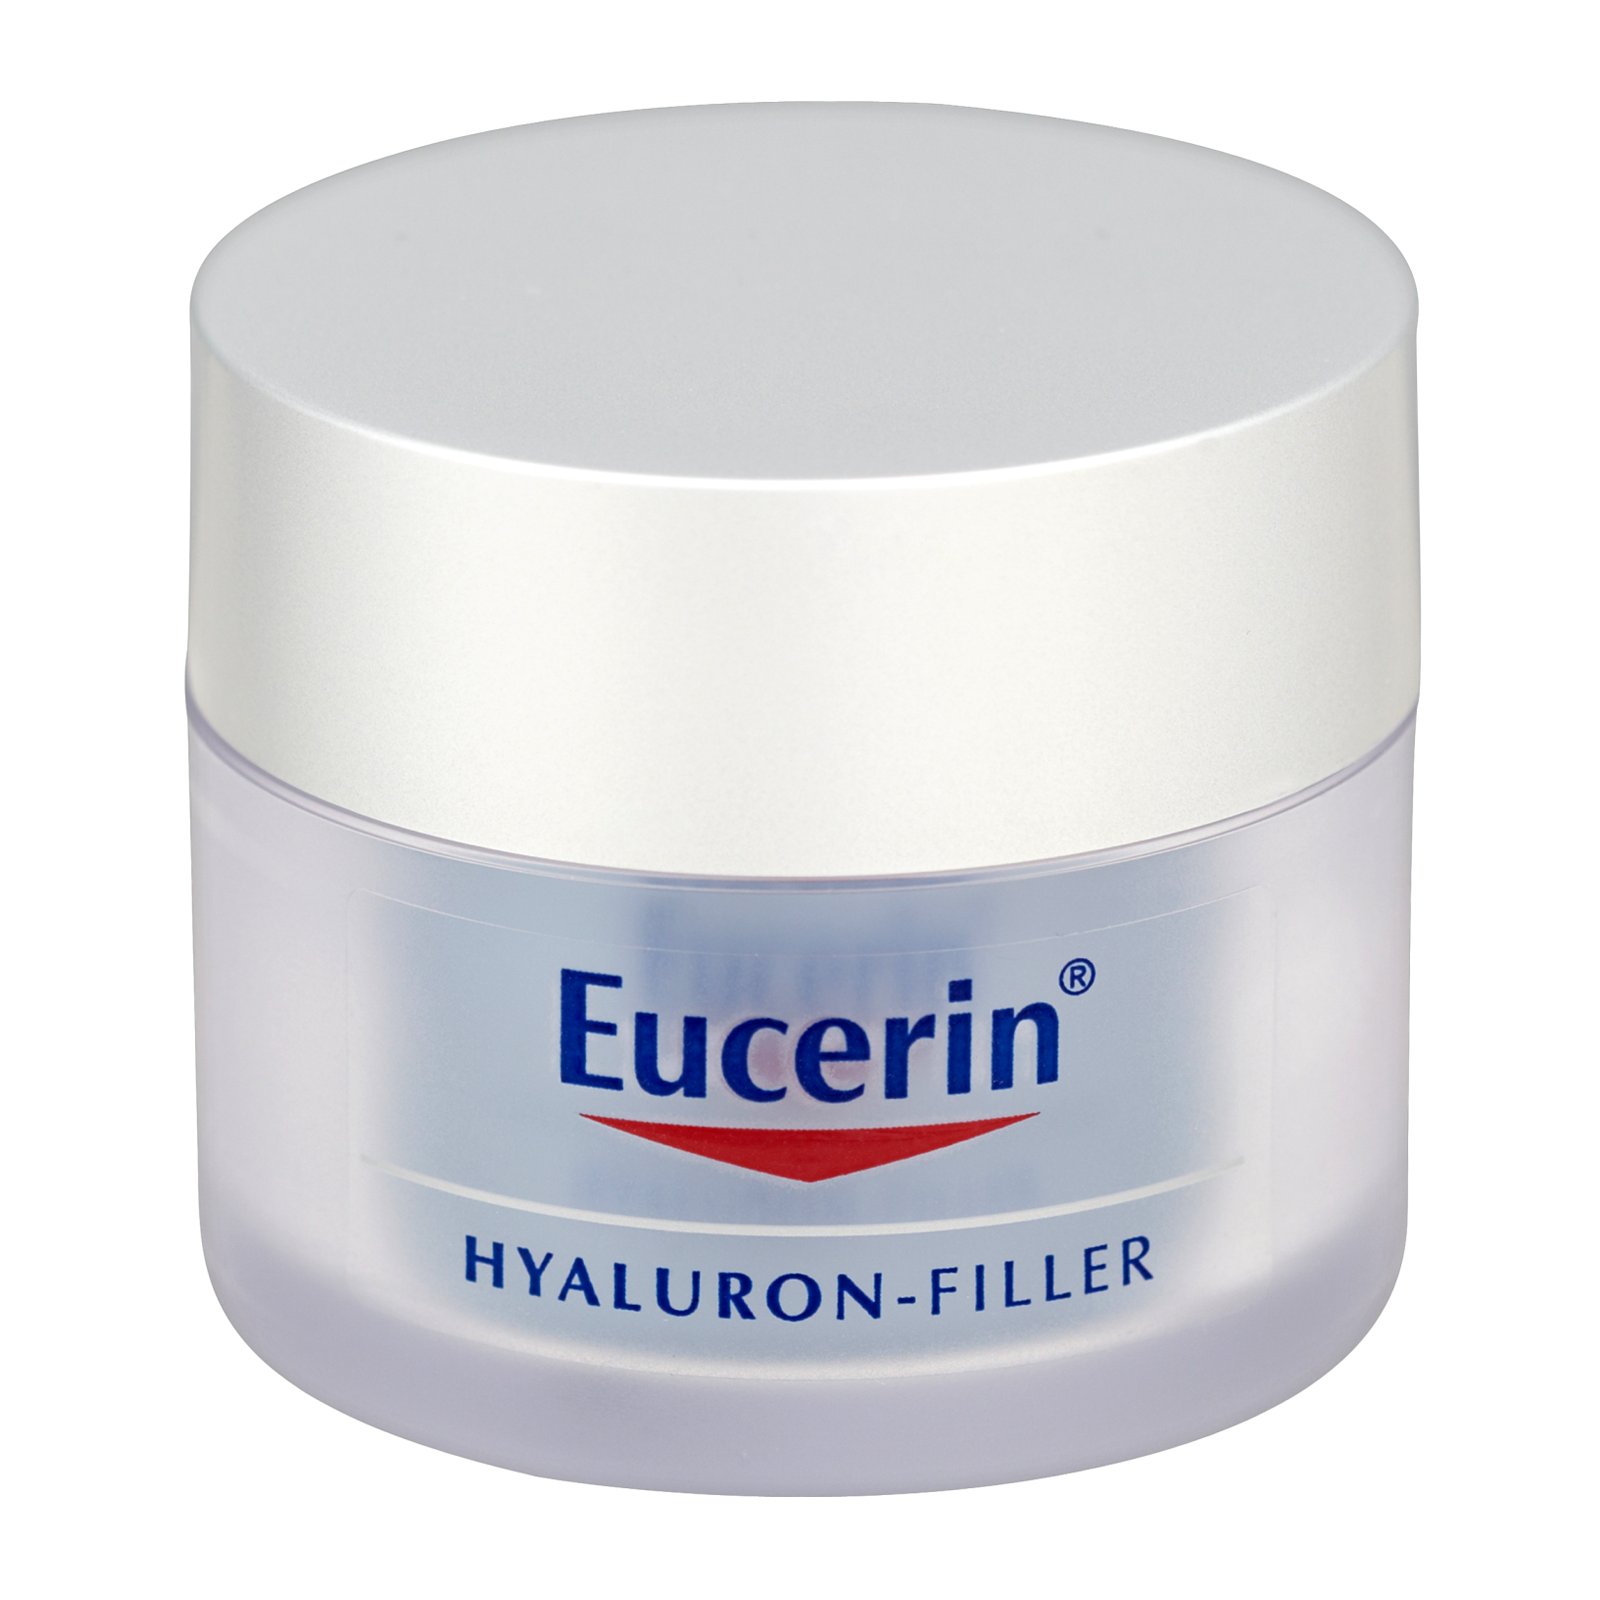 eucerin anti-age hyaluron-filler night cream 50ml